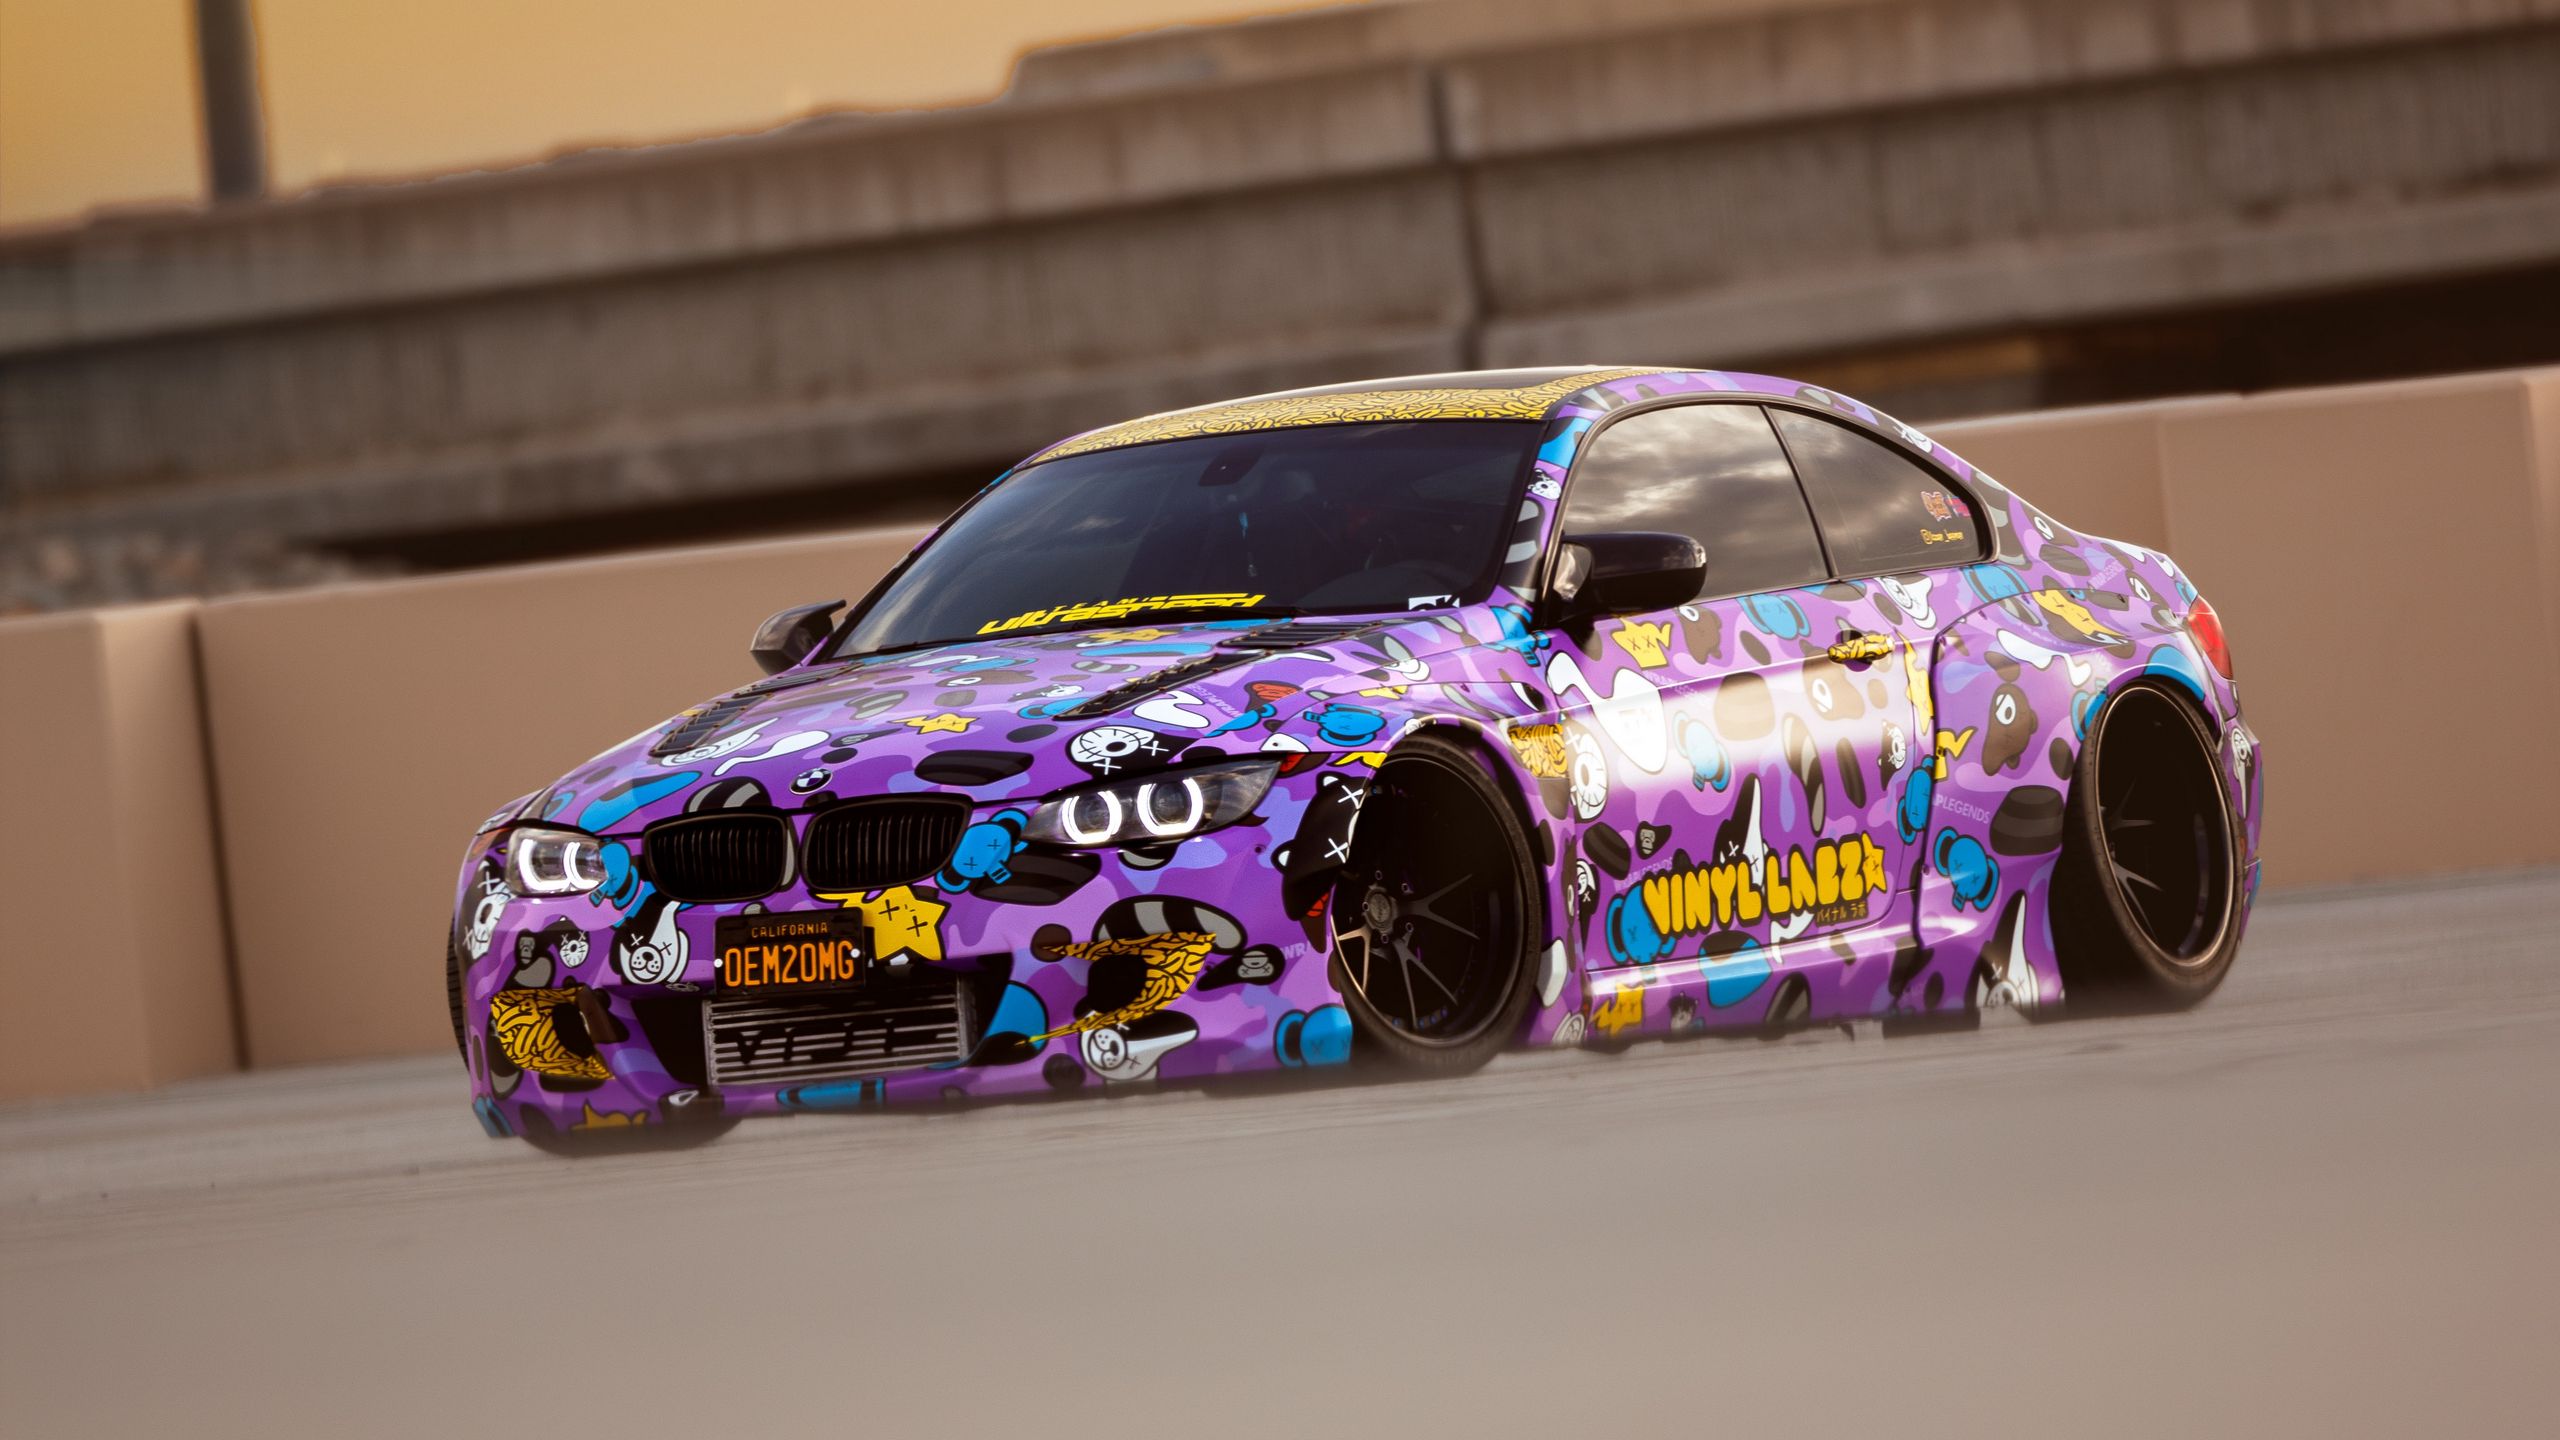 Download wallpaper x bmw car drift track purple widescreen hd background